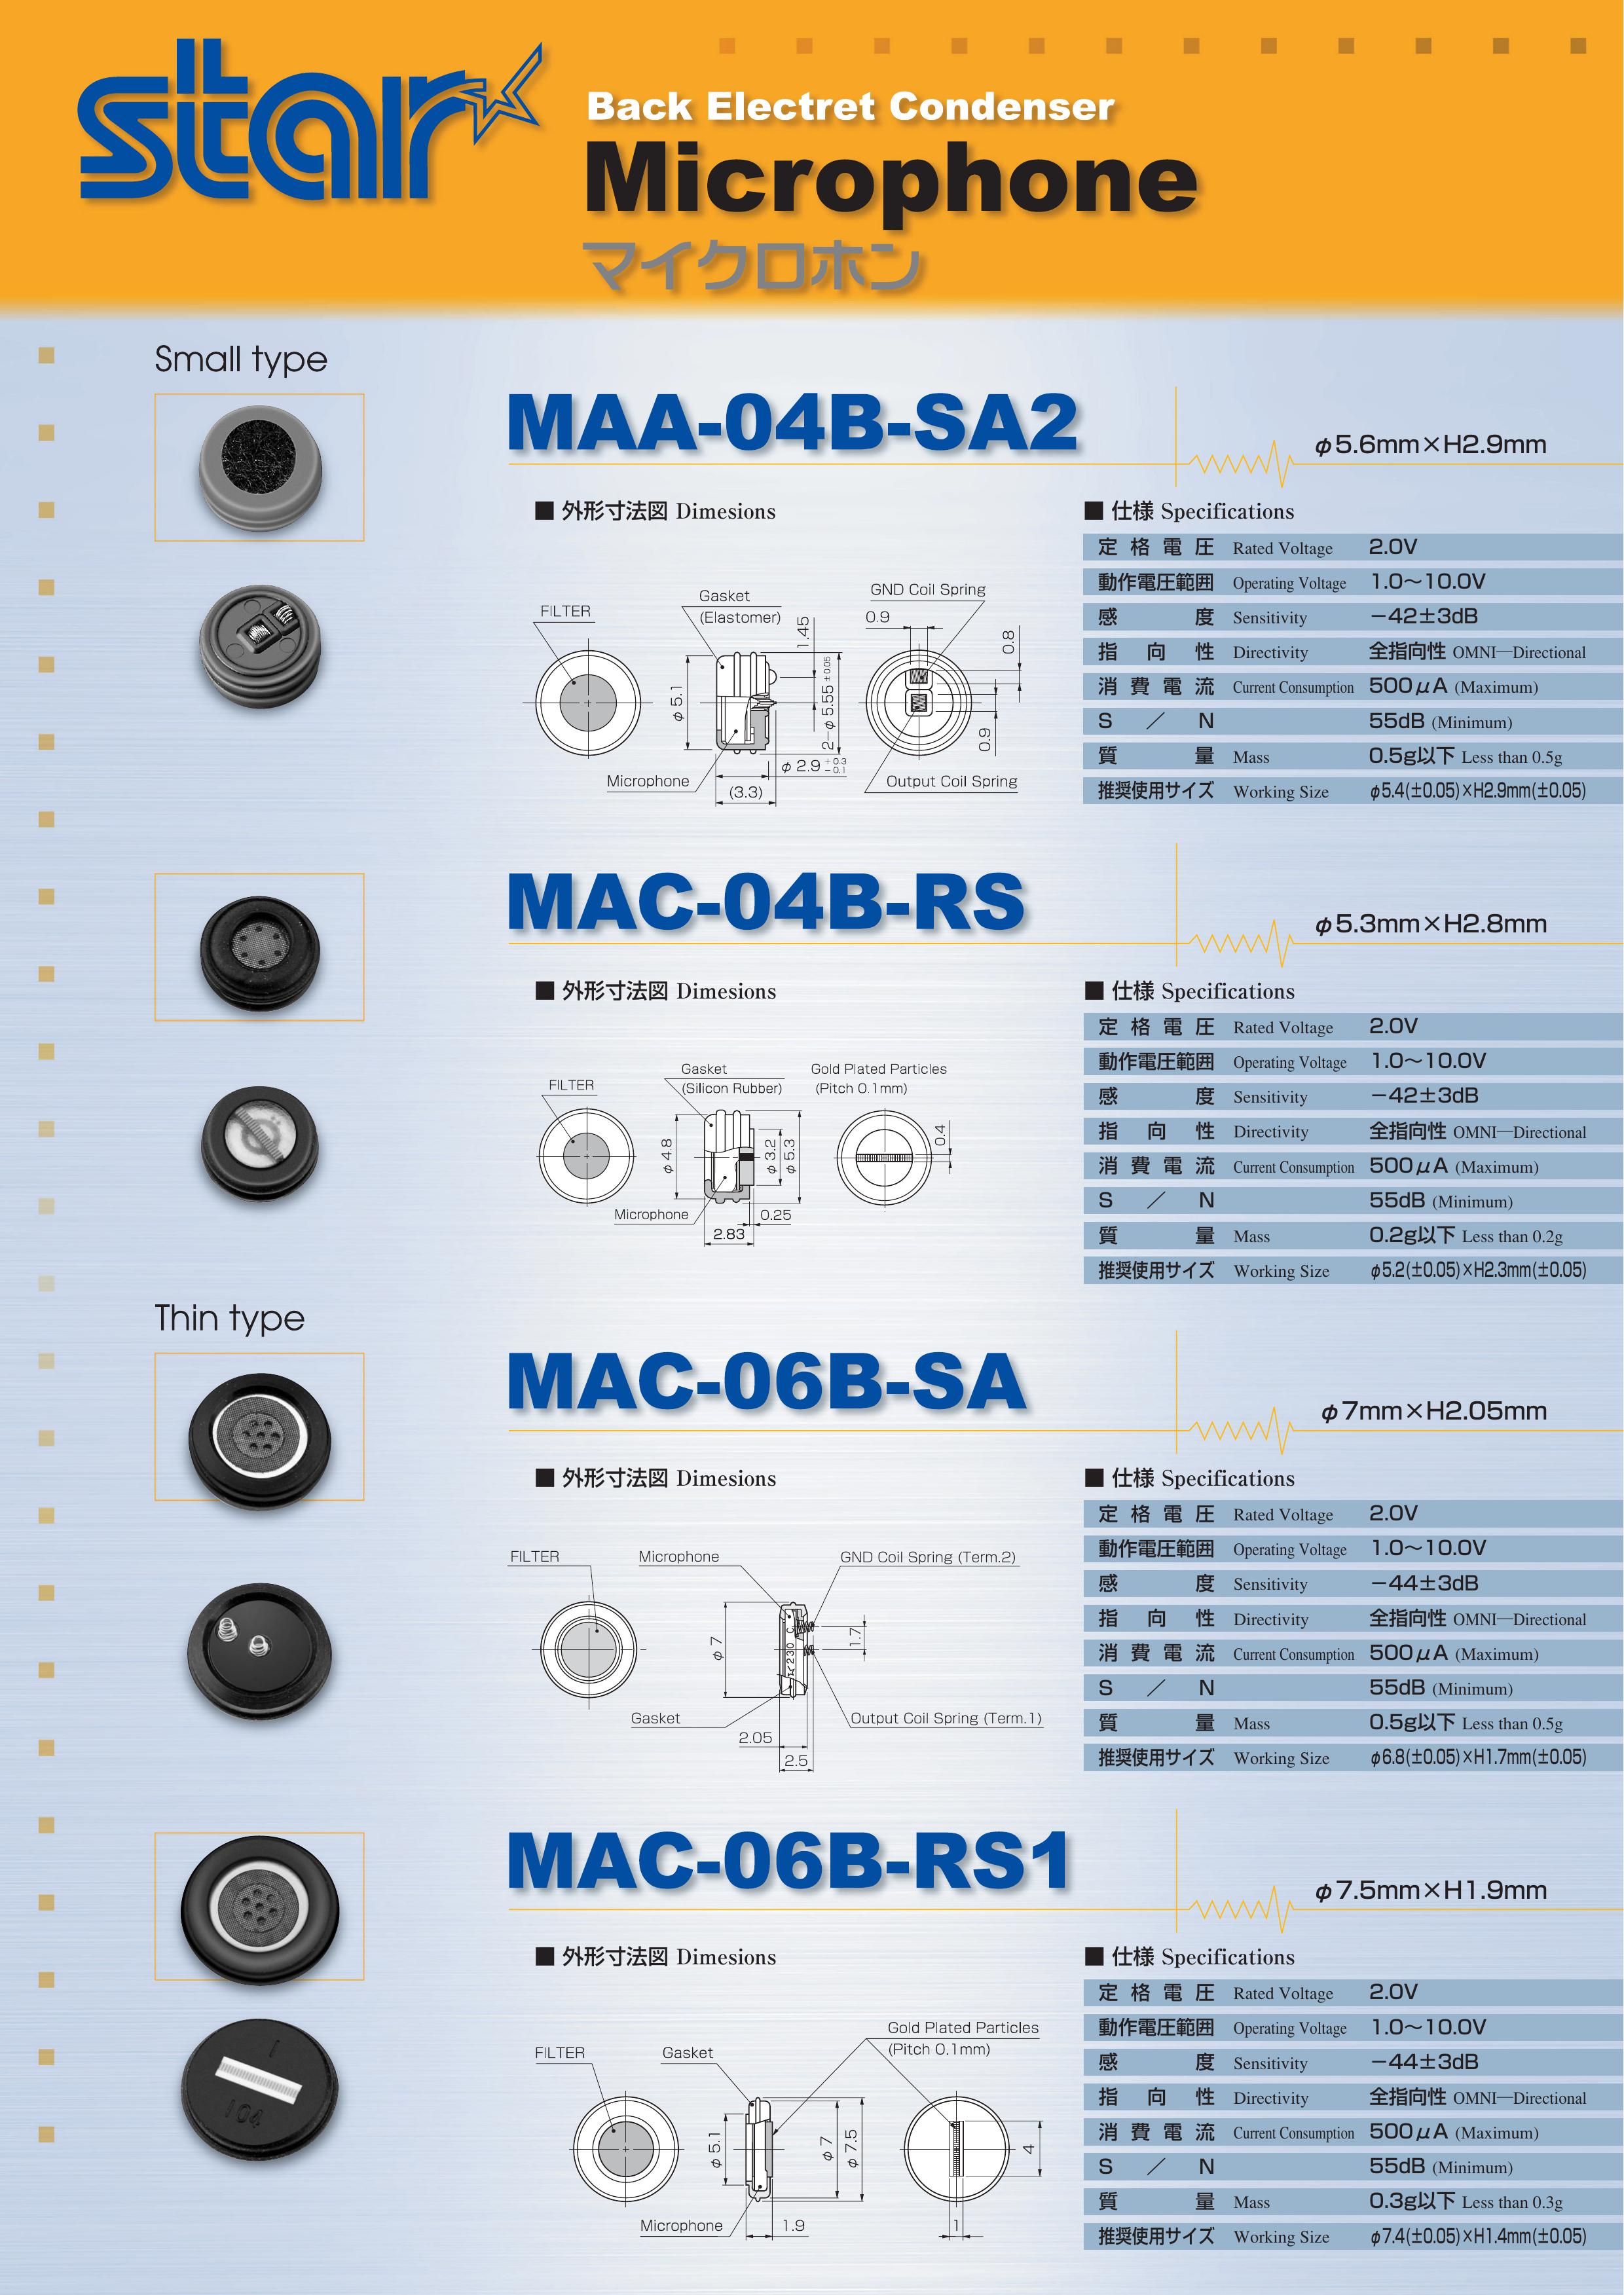 Star Micronics MAA-04B-SA2 Microphone User Manual